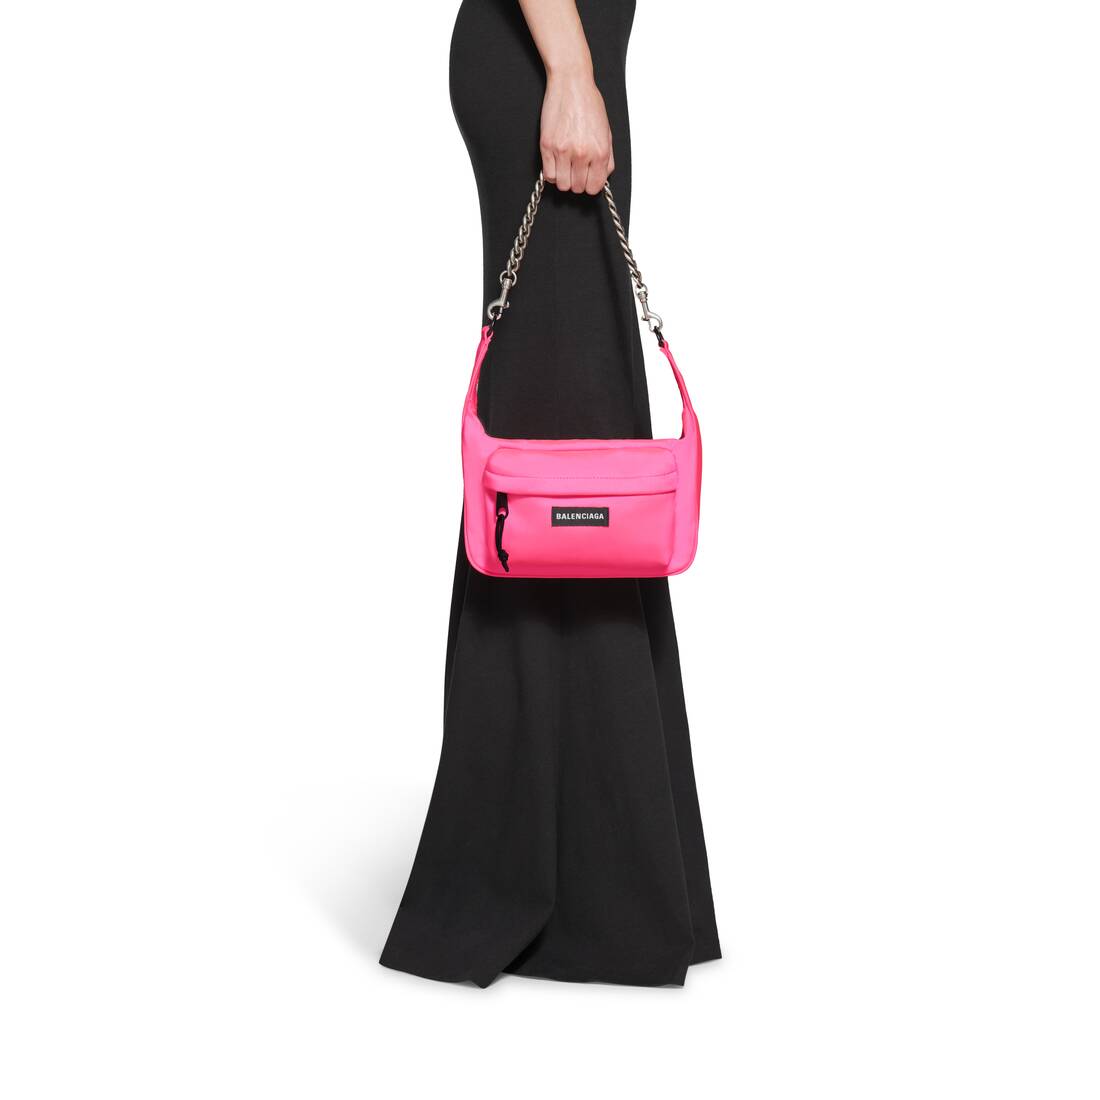 Downtown Small Leather Shoulder Bag in Pink  Balenciaga  Mytheresa